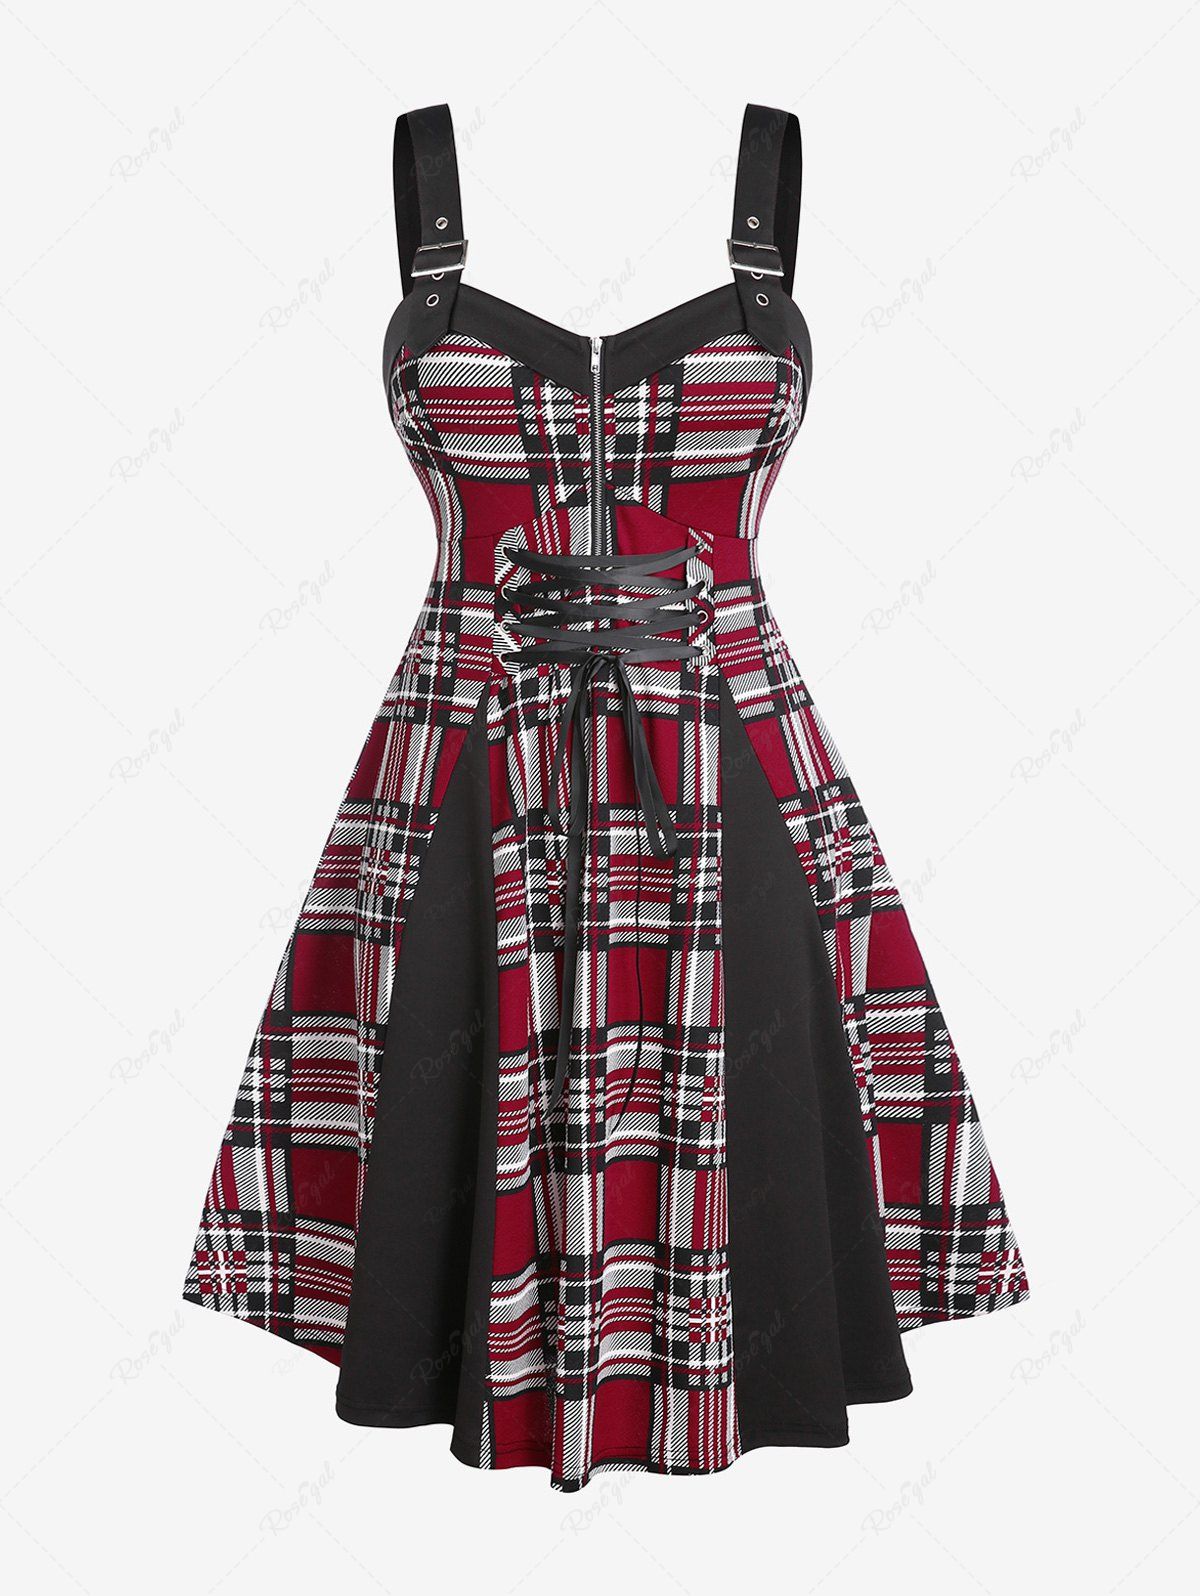 Affordable Plus Size Buckled Strap Plaid Lace Up Vintage 1950s Dress  